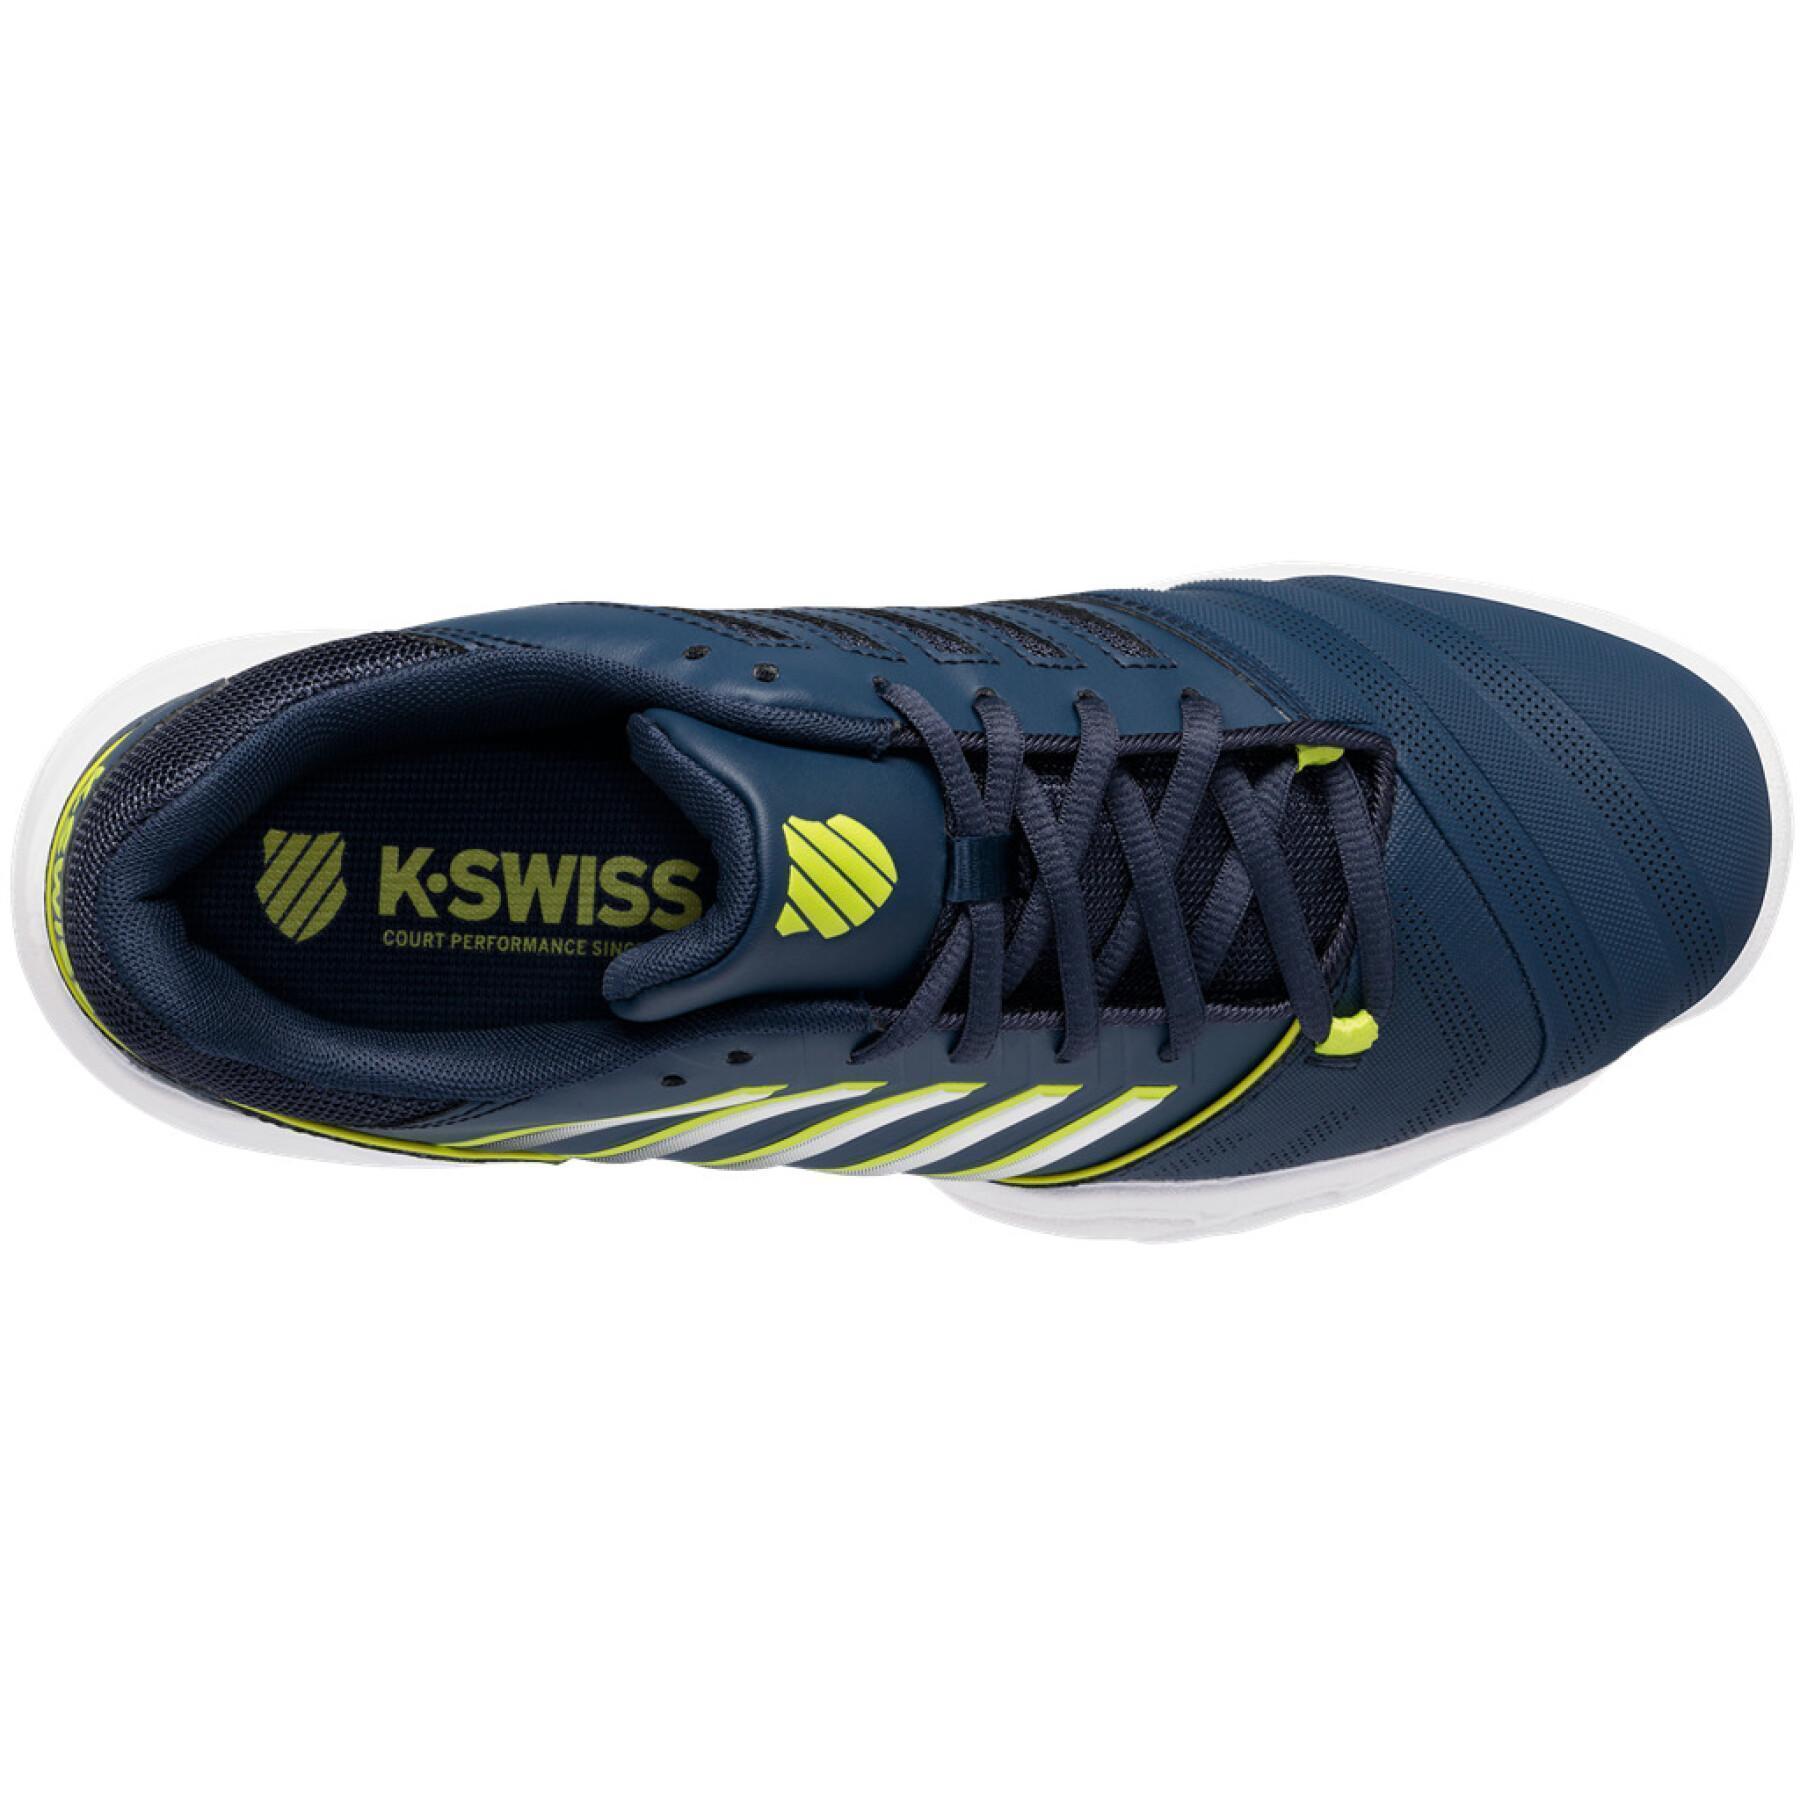 Tennis shoes K-Swiss Bigshot Light 4 Carpet